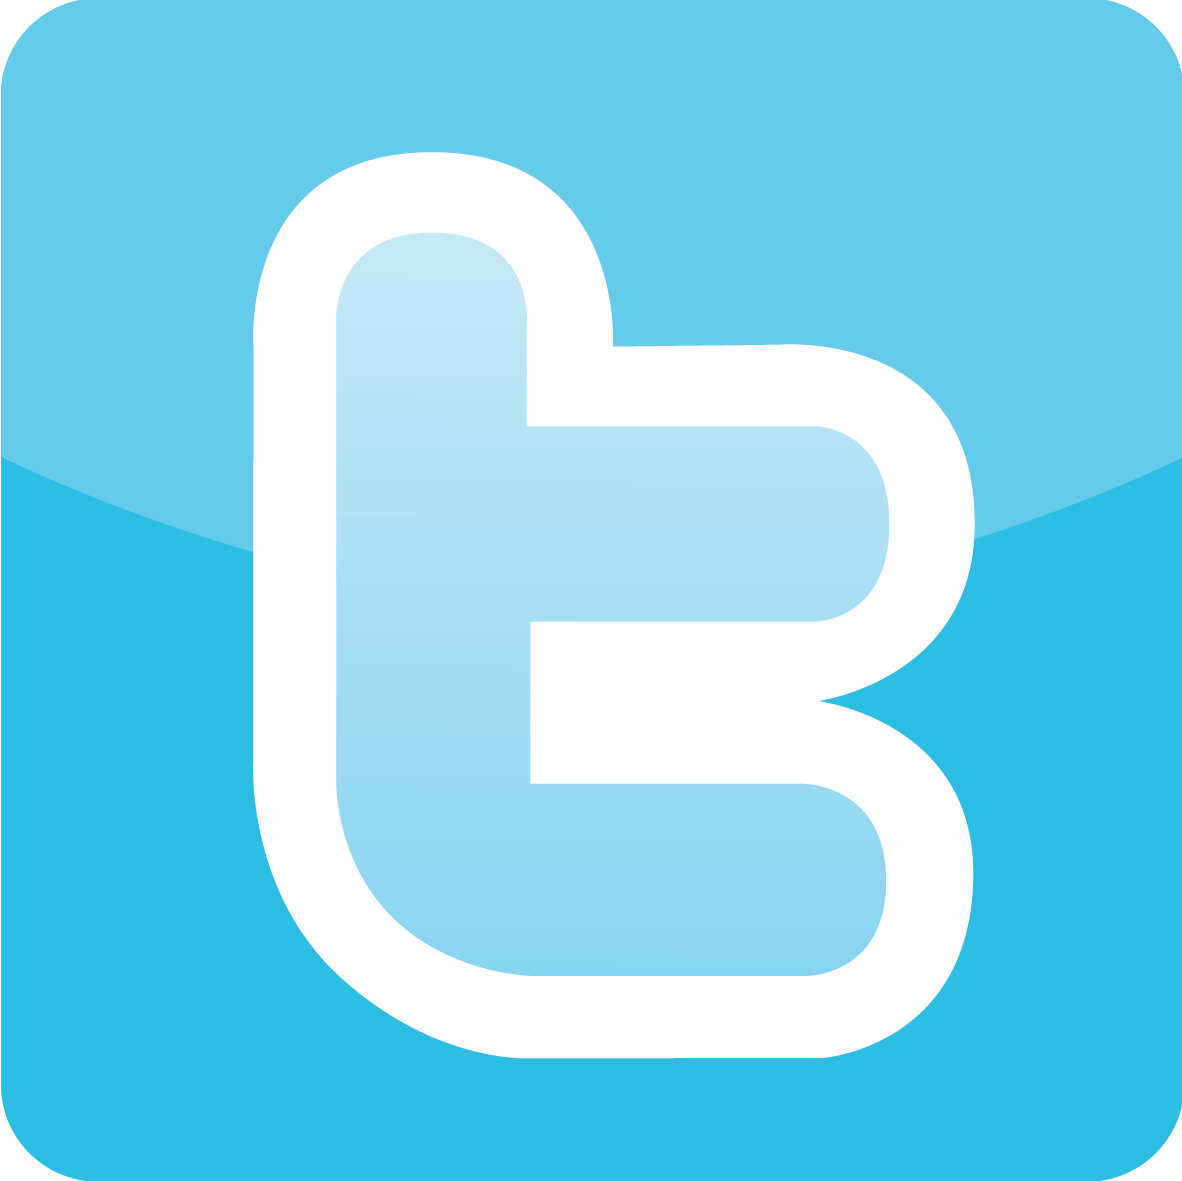 Twitter App Logo - Free Twitter App Icon Transparent 336238. Download Twitter App Icon